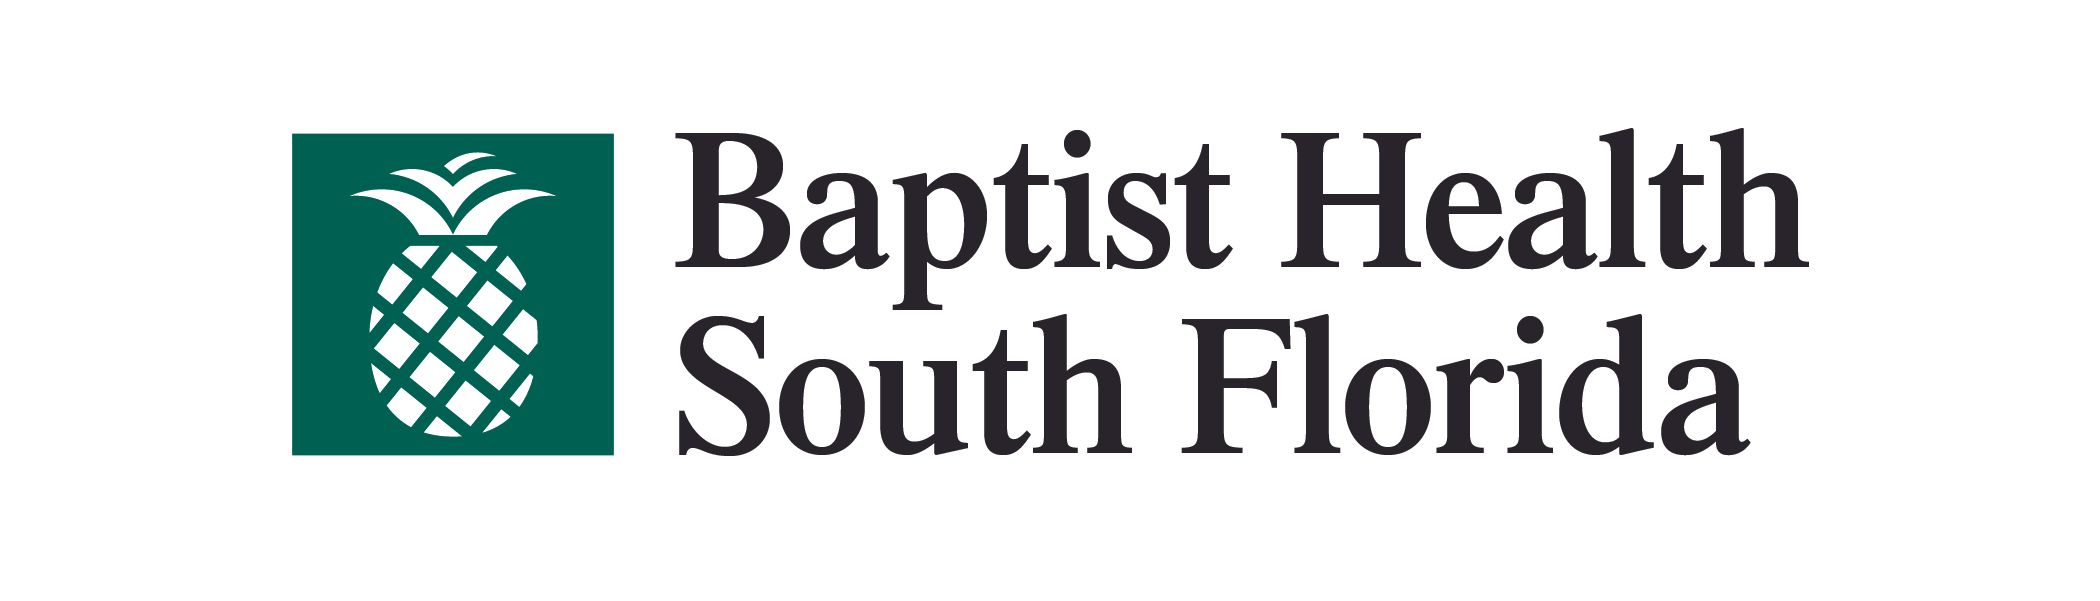 Baptist Health Cancer Care logo